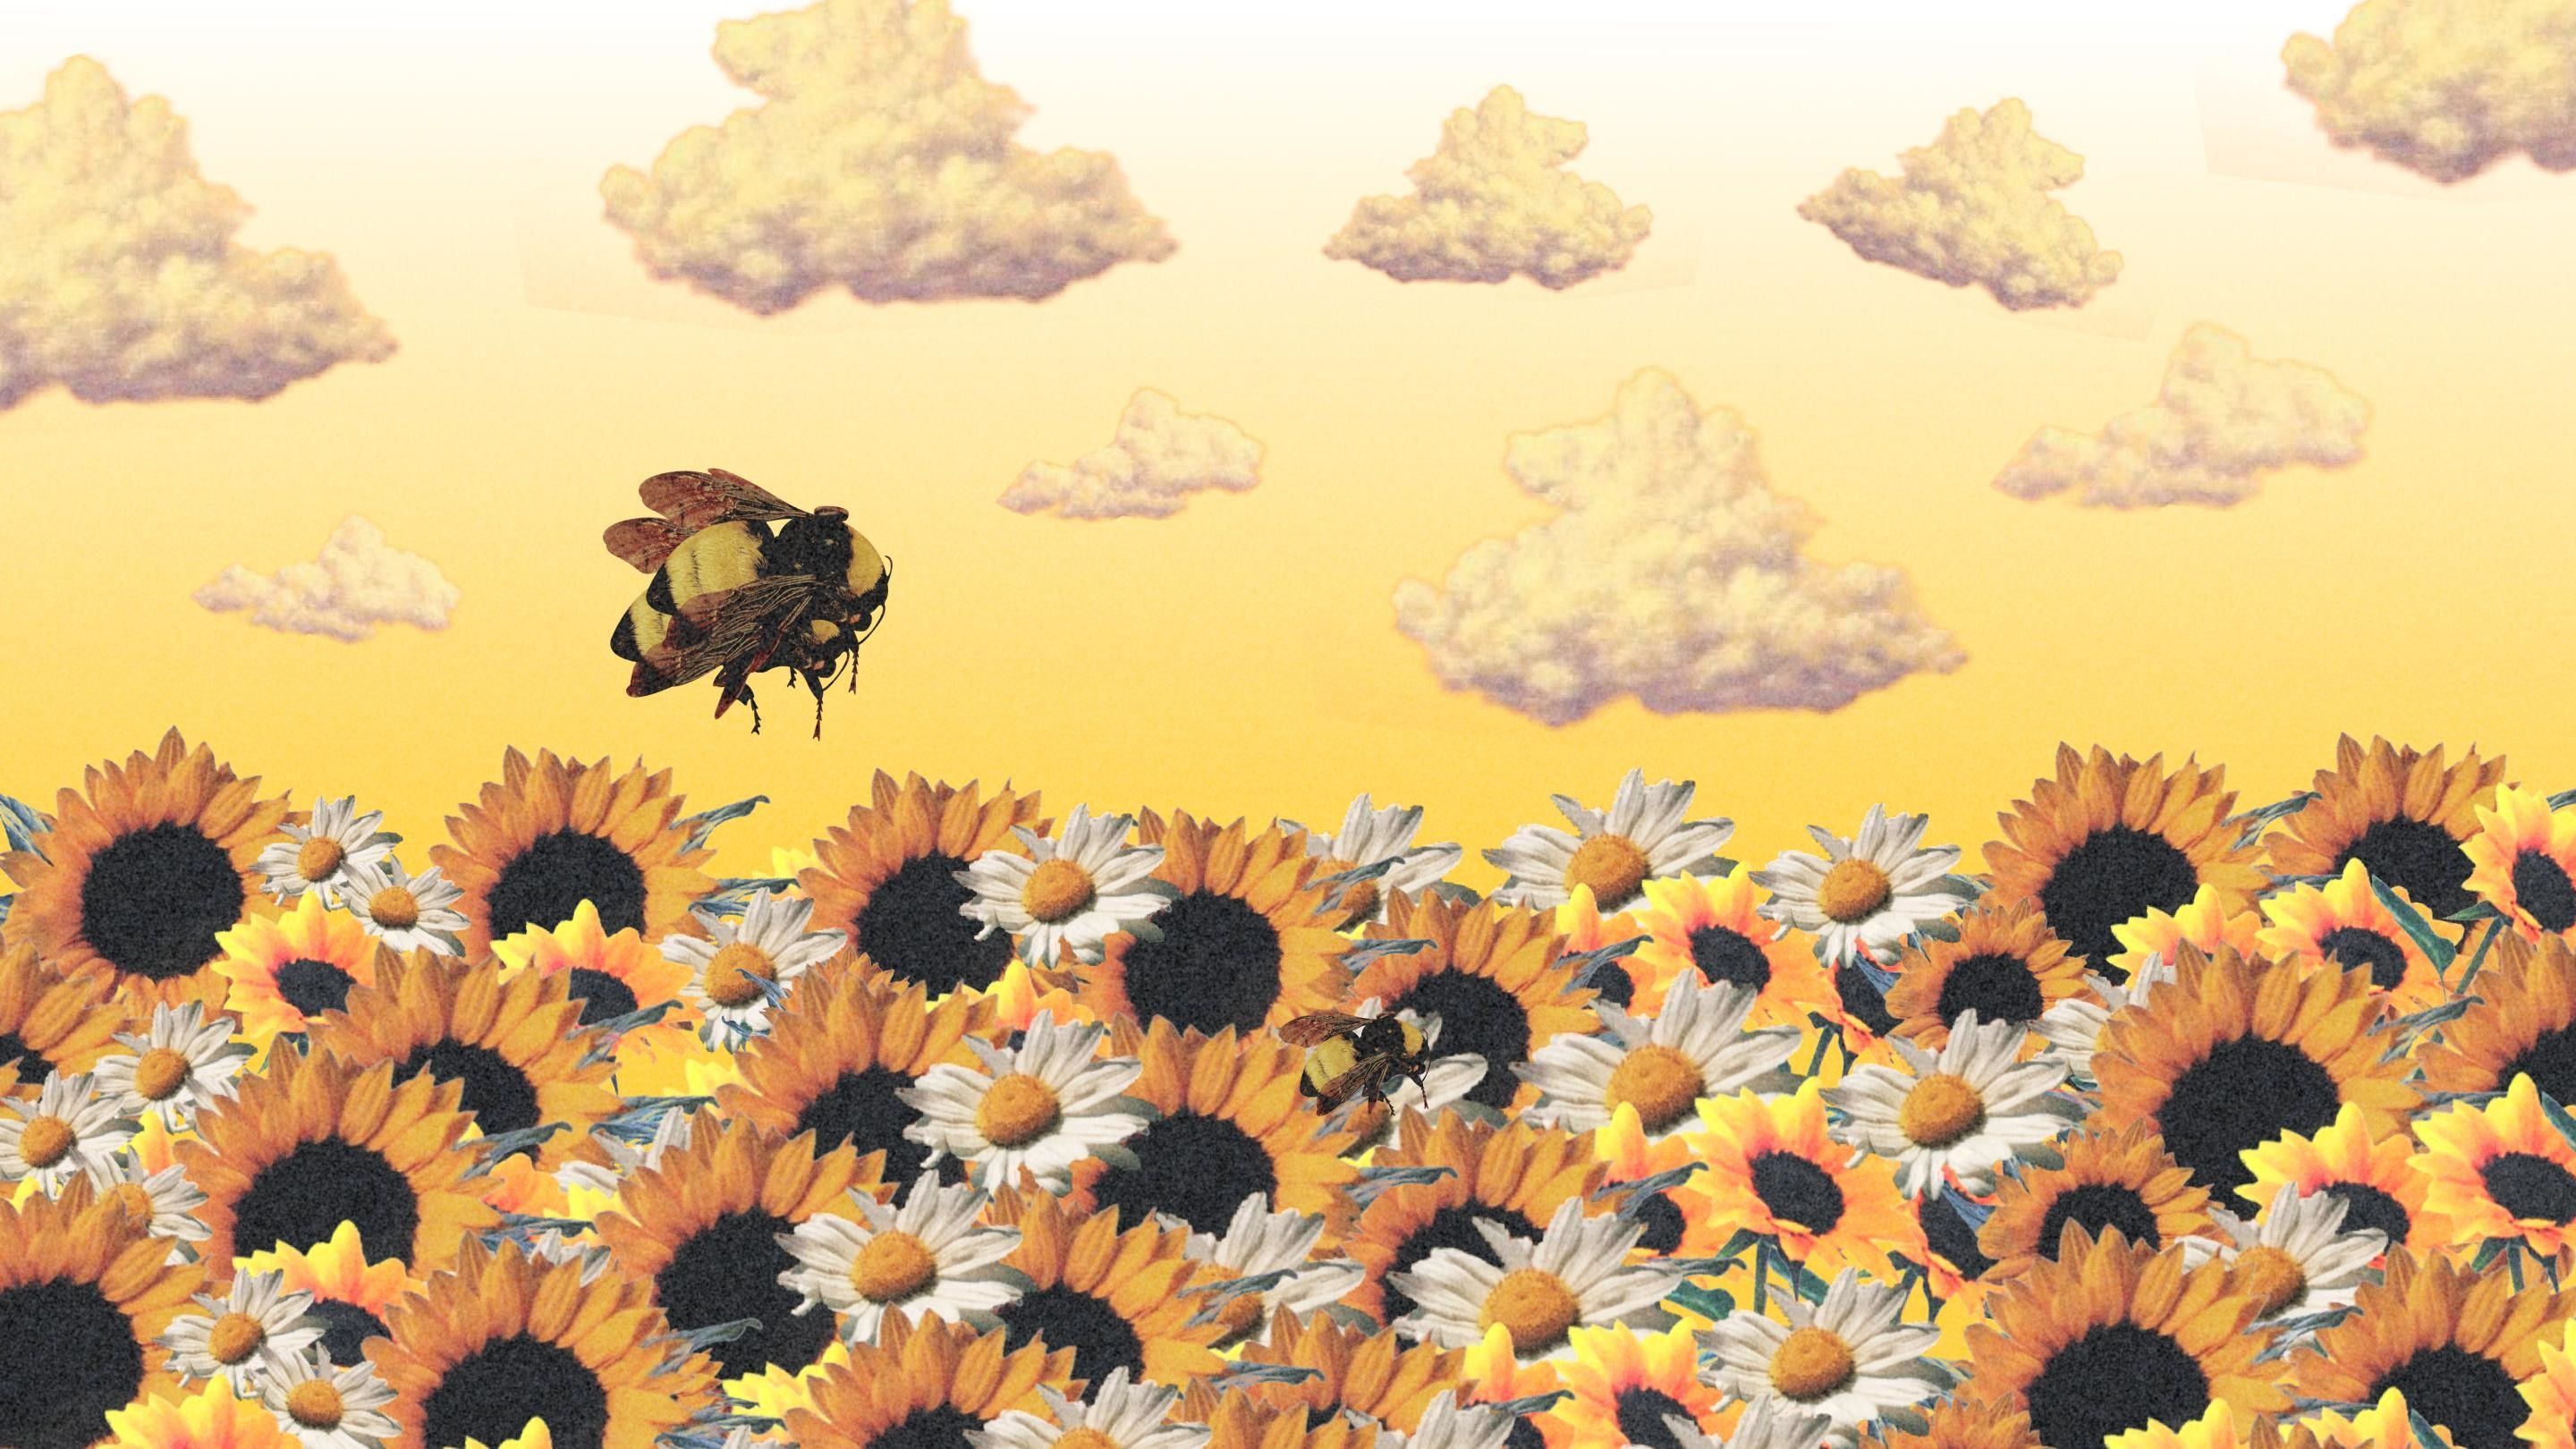 Res: 2880x Yellow bee wallpaper. Tyler the creator wallpaper, Desktop wallpaper art, Cute desktop wallpaper